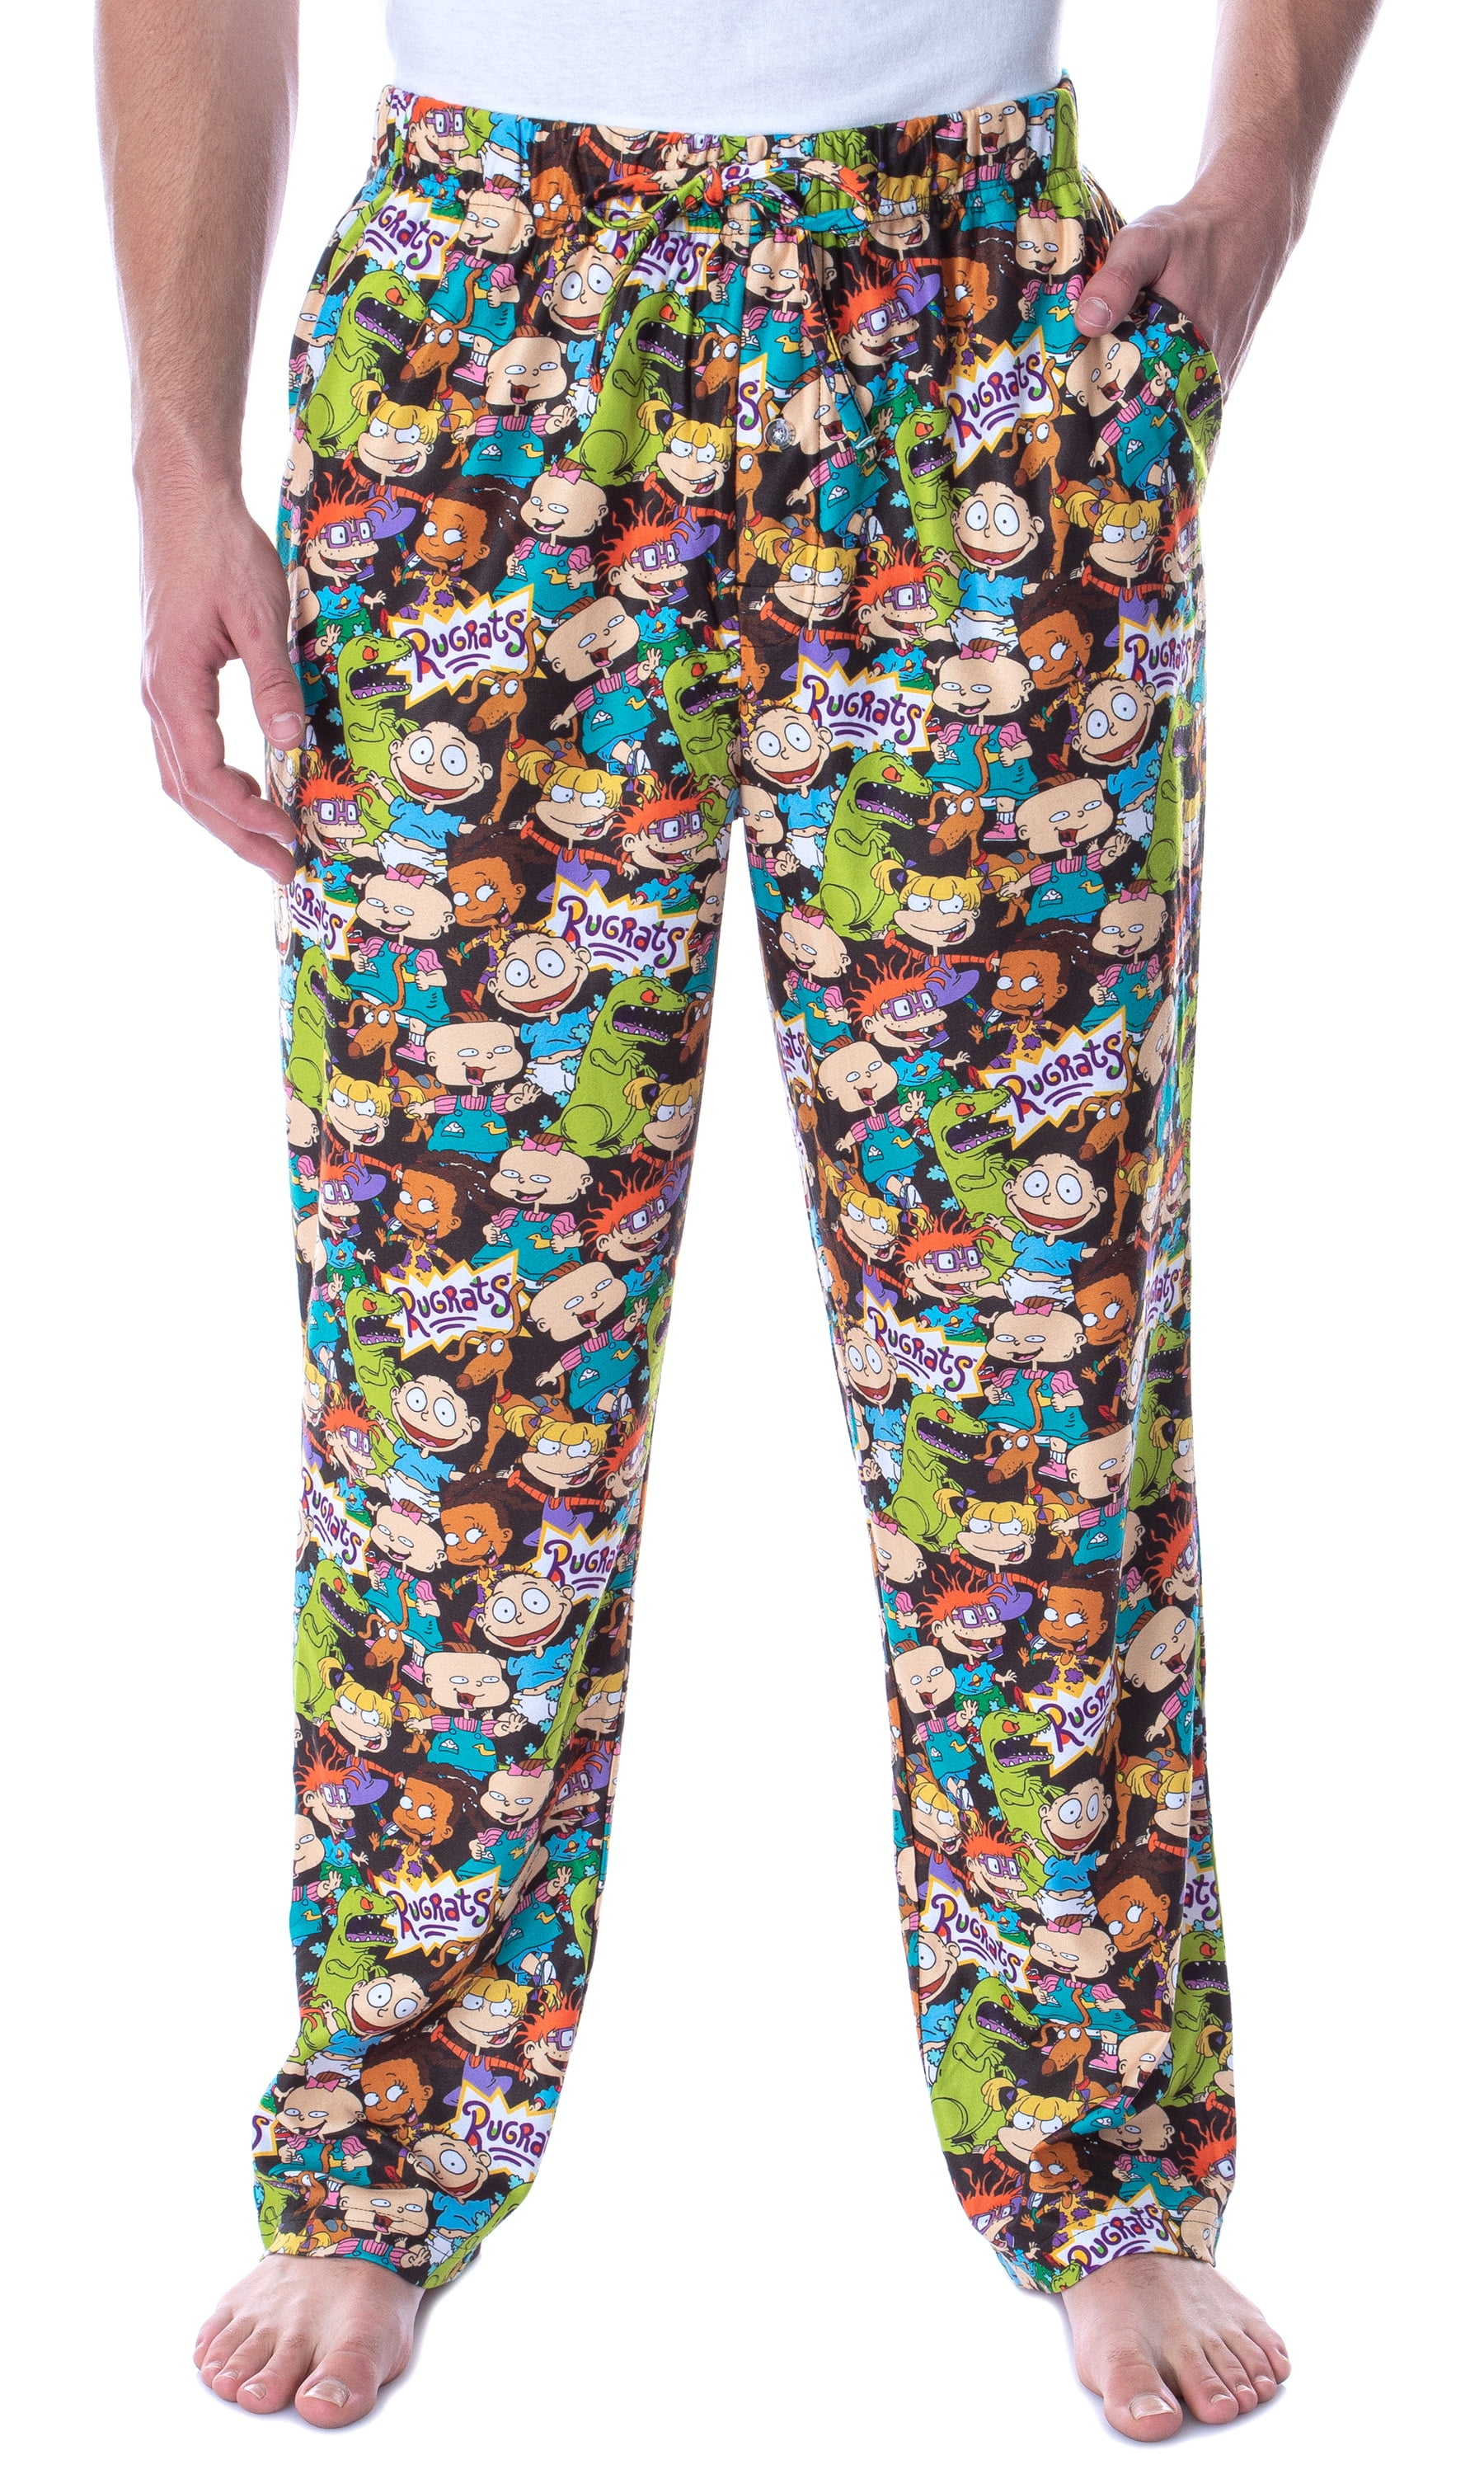 Nickelodeon Men's Adult Avatar The Last Airbender Cartoon Character Loungewear Pajama Pants